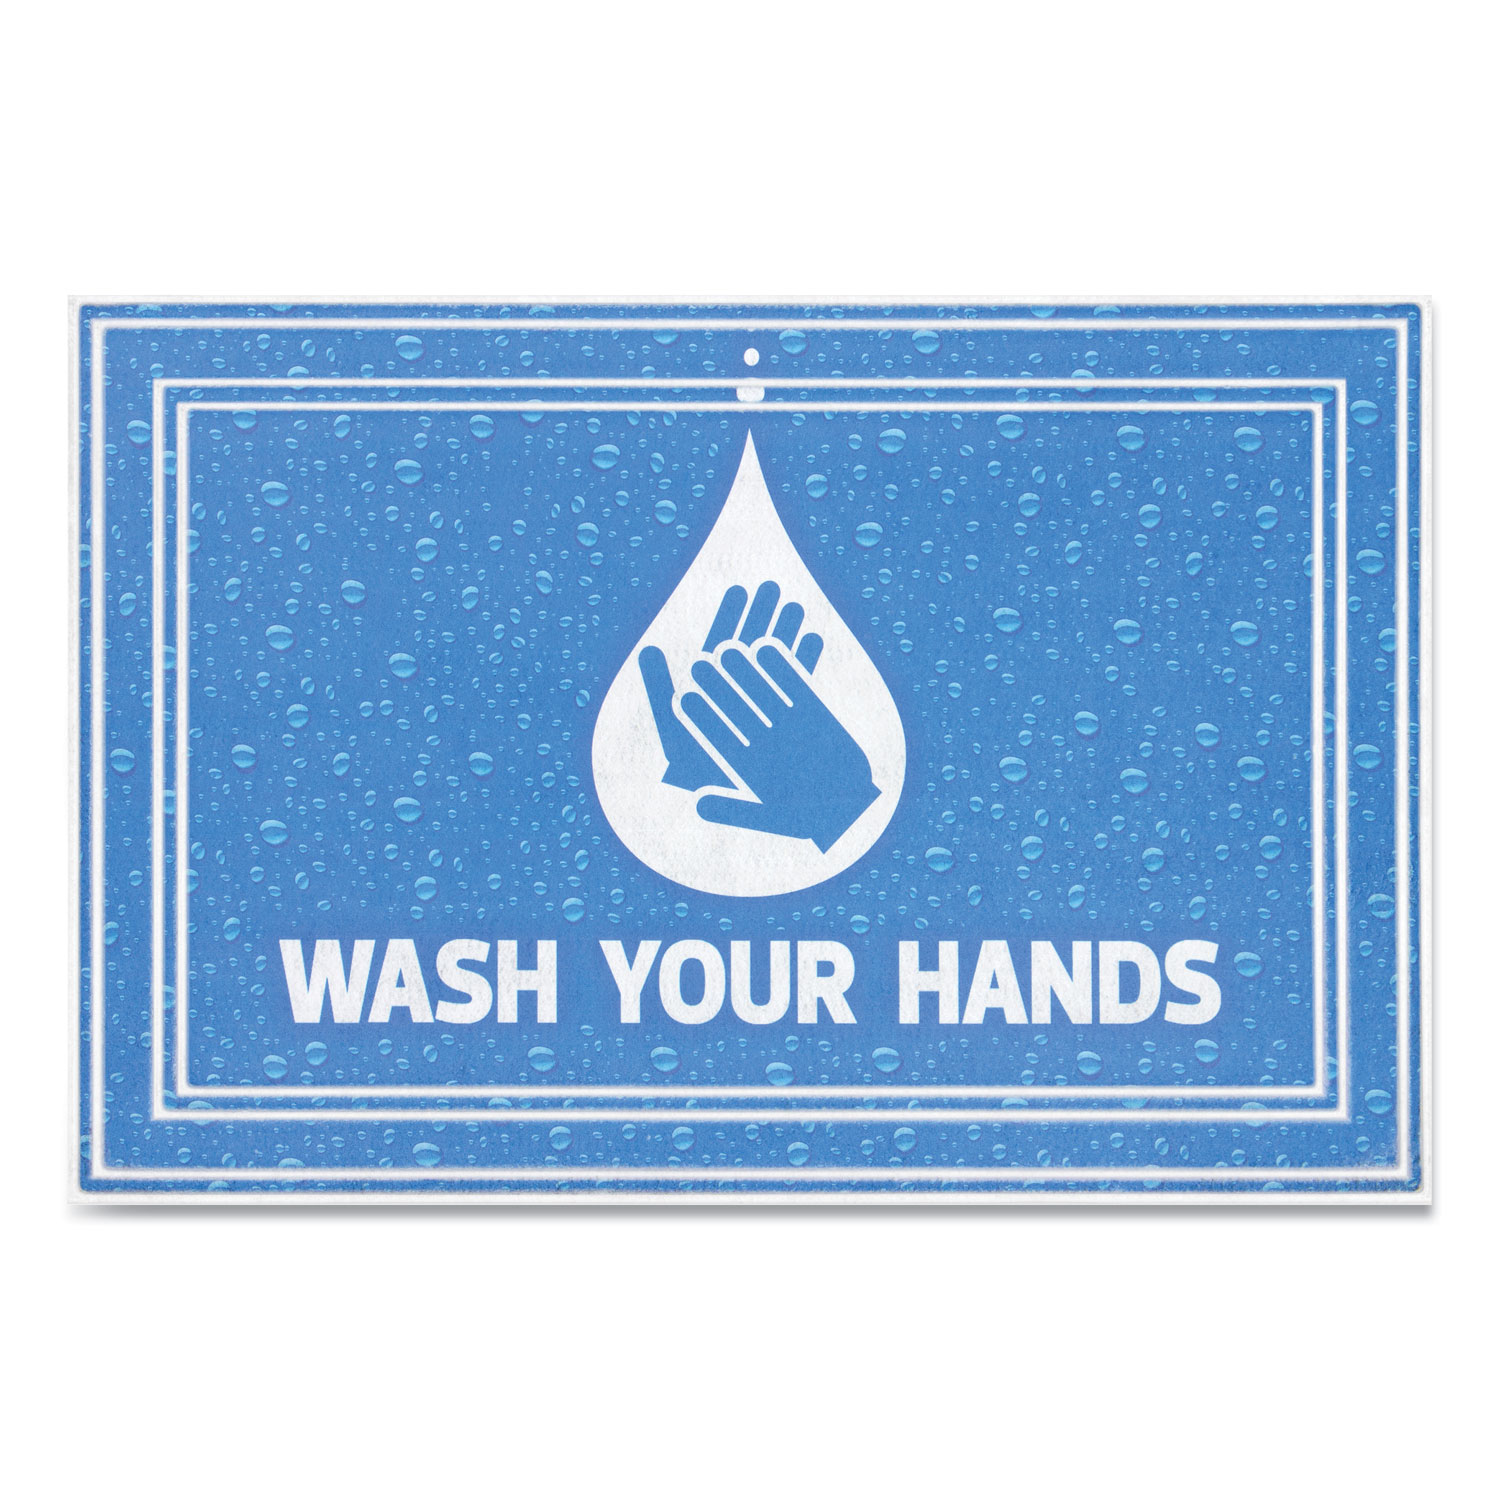  Apache Mills 3984528822X3 Message Floor Mats, 24 x 36, Blue, Wash Your Hands (APH3984528822X3) 